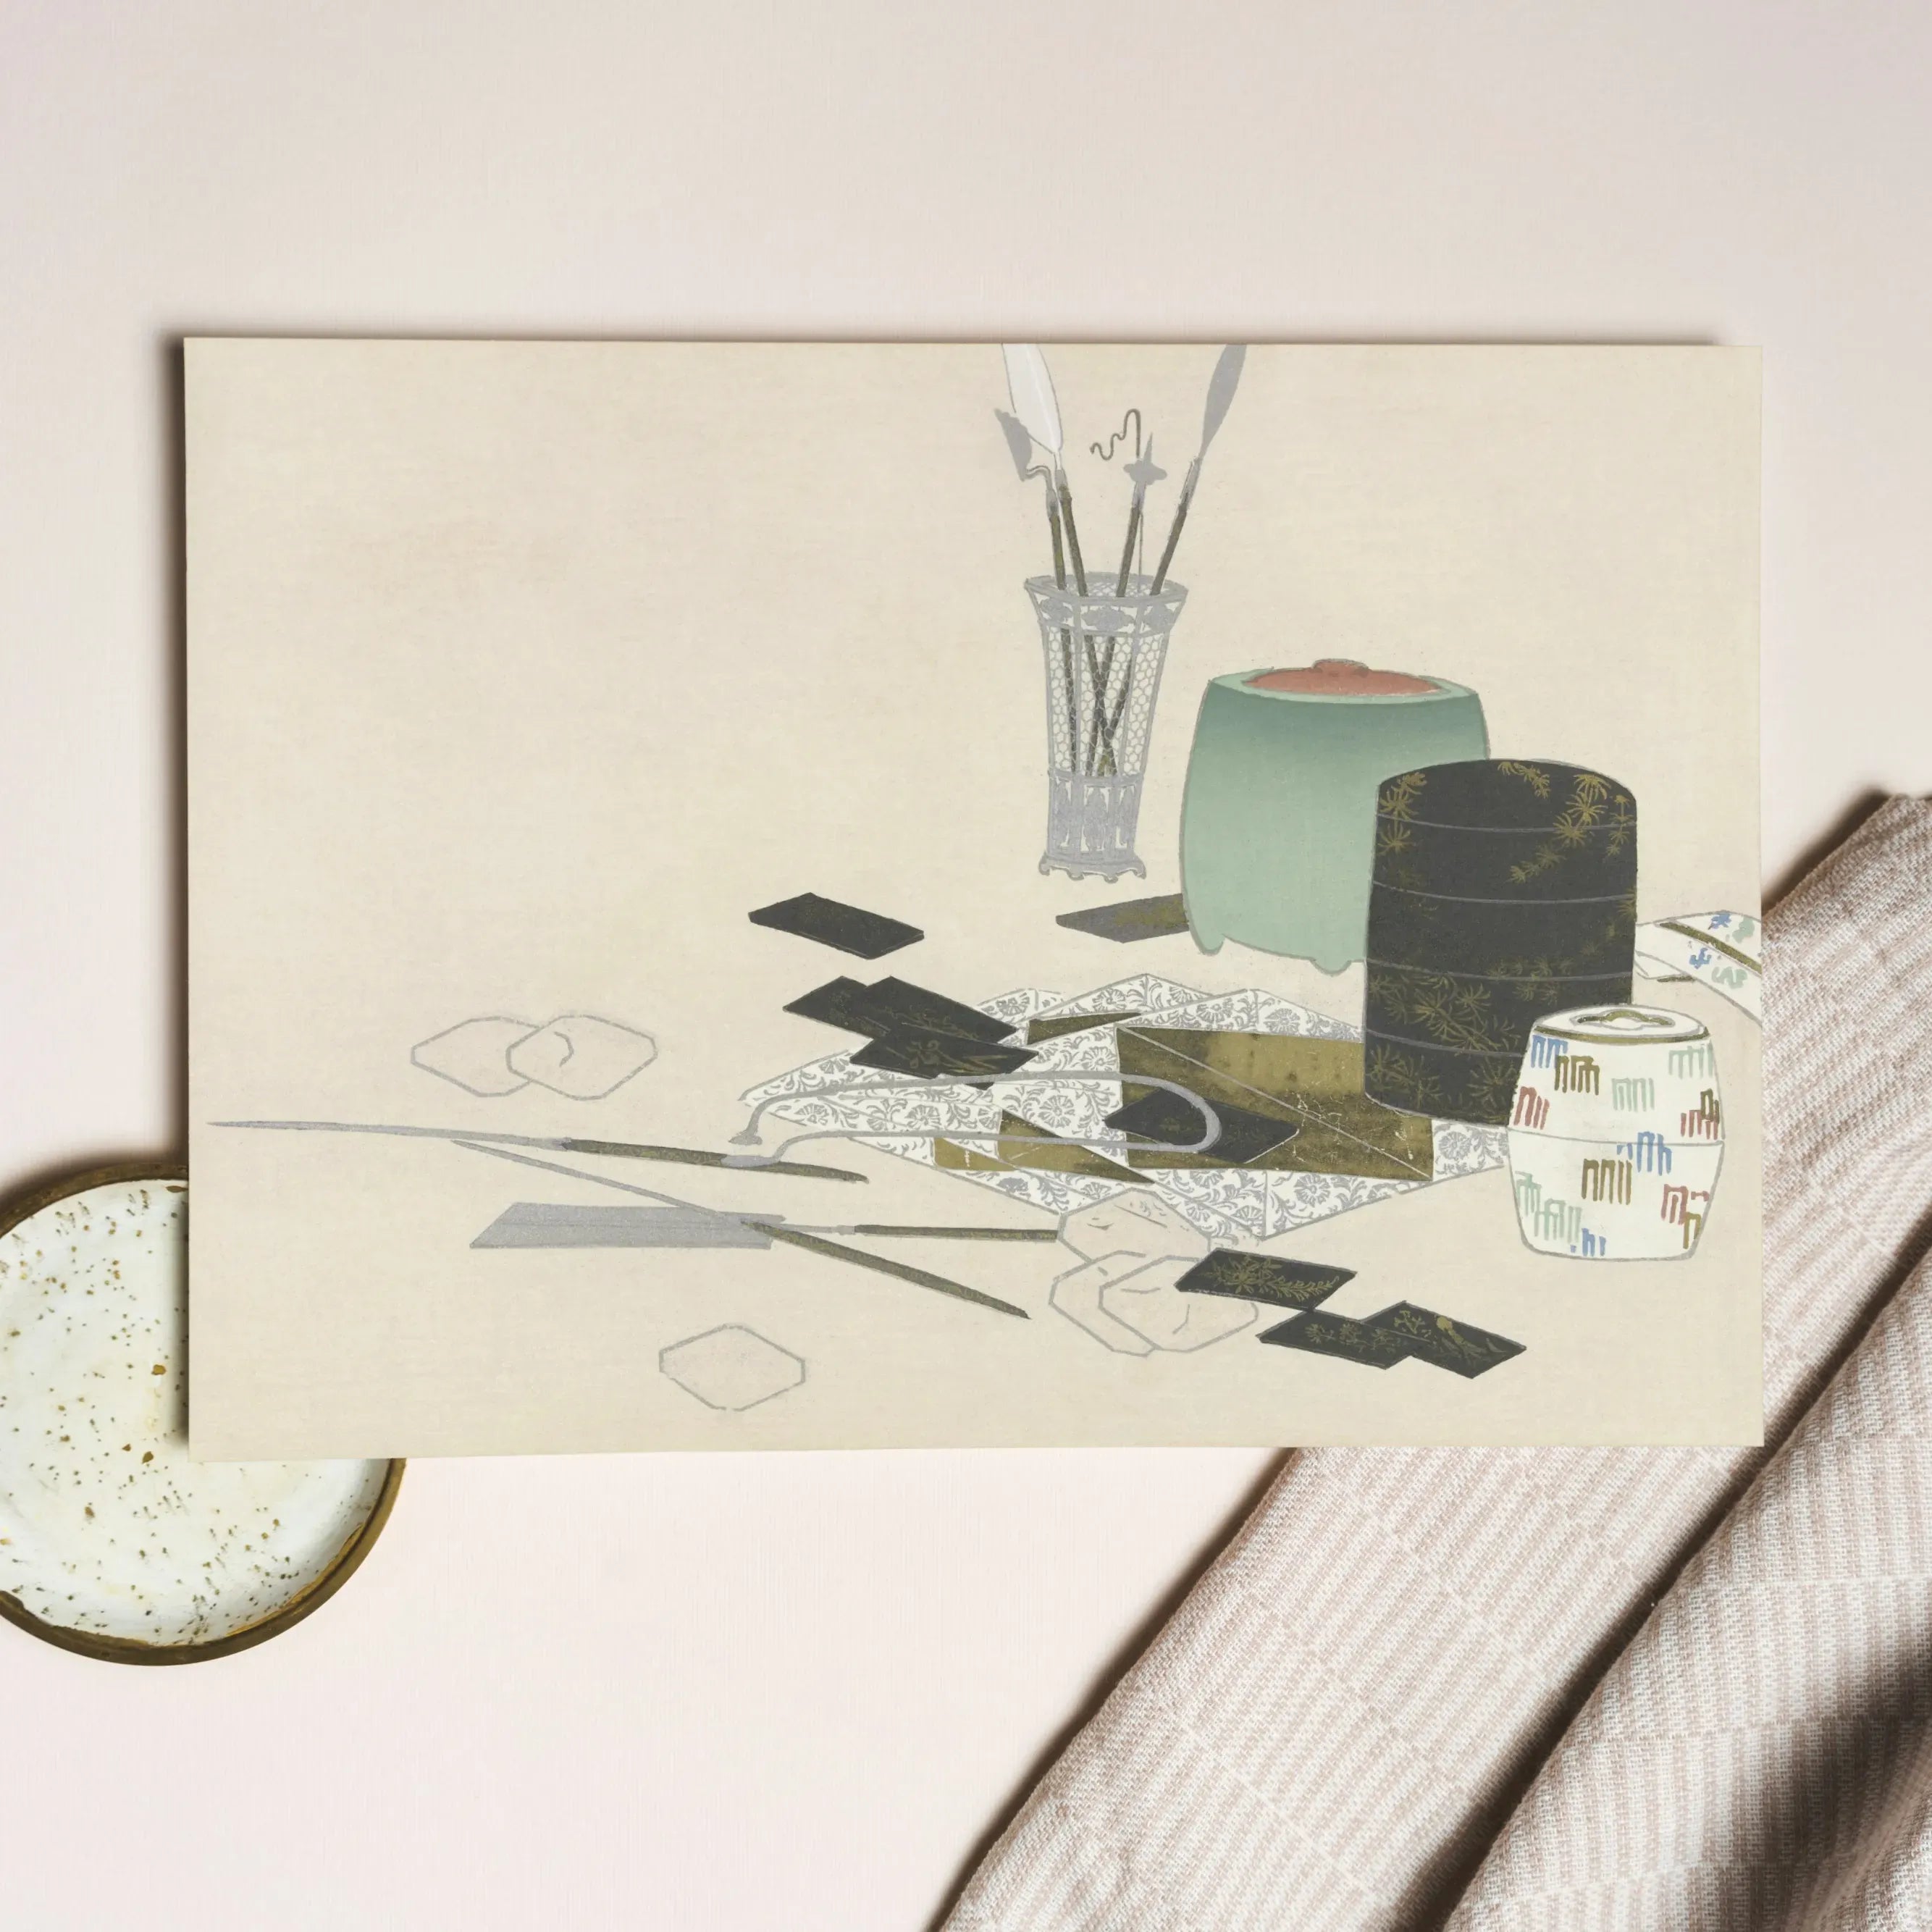 Art Supplies By Kamisaka Sekka Greeting Card - Greeting & Note Cards - Aesthetic Art